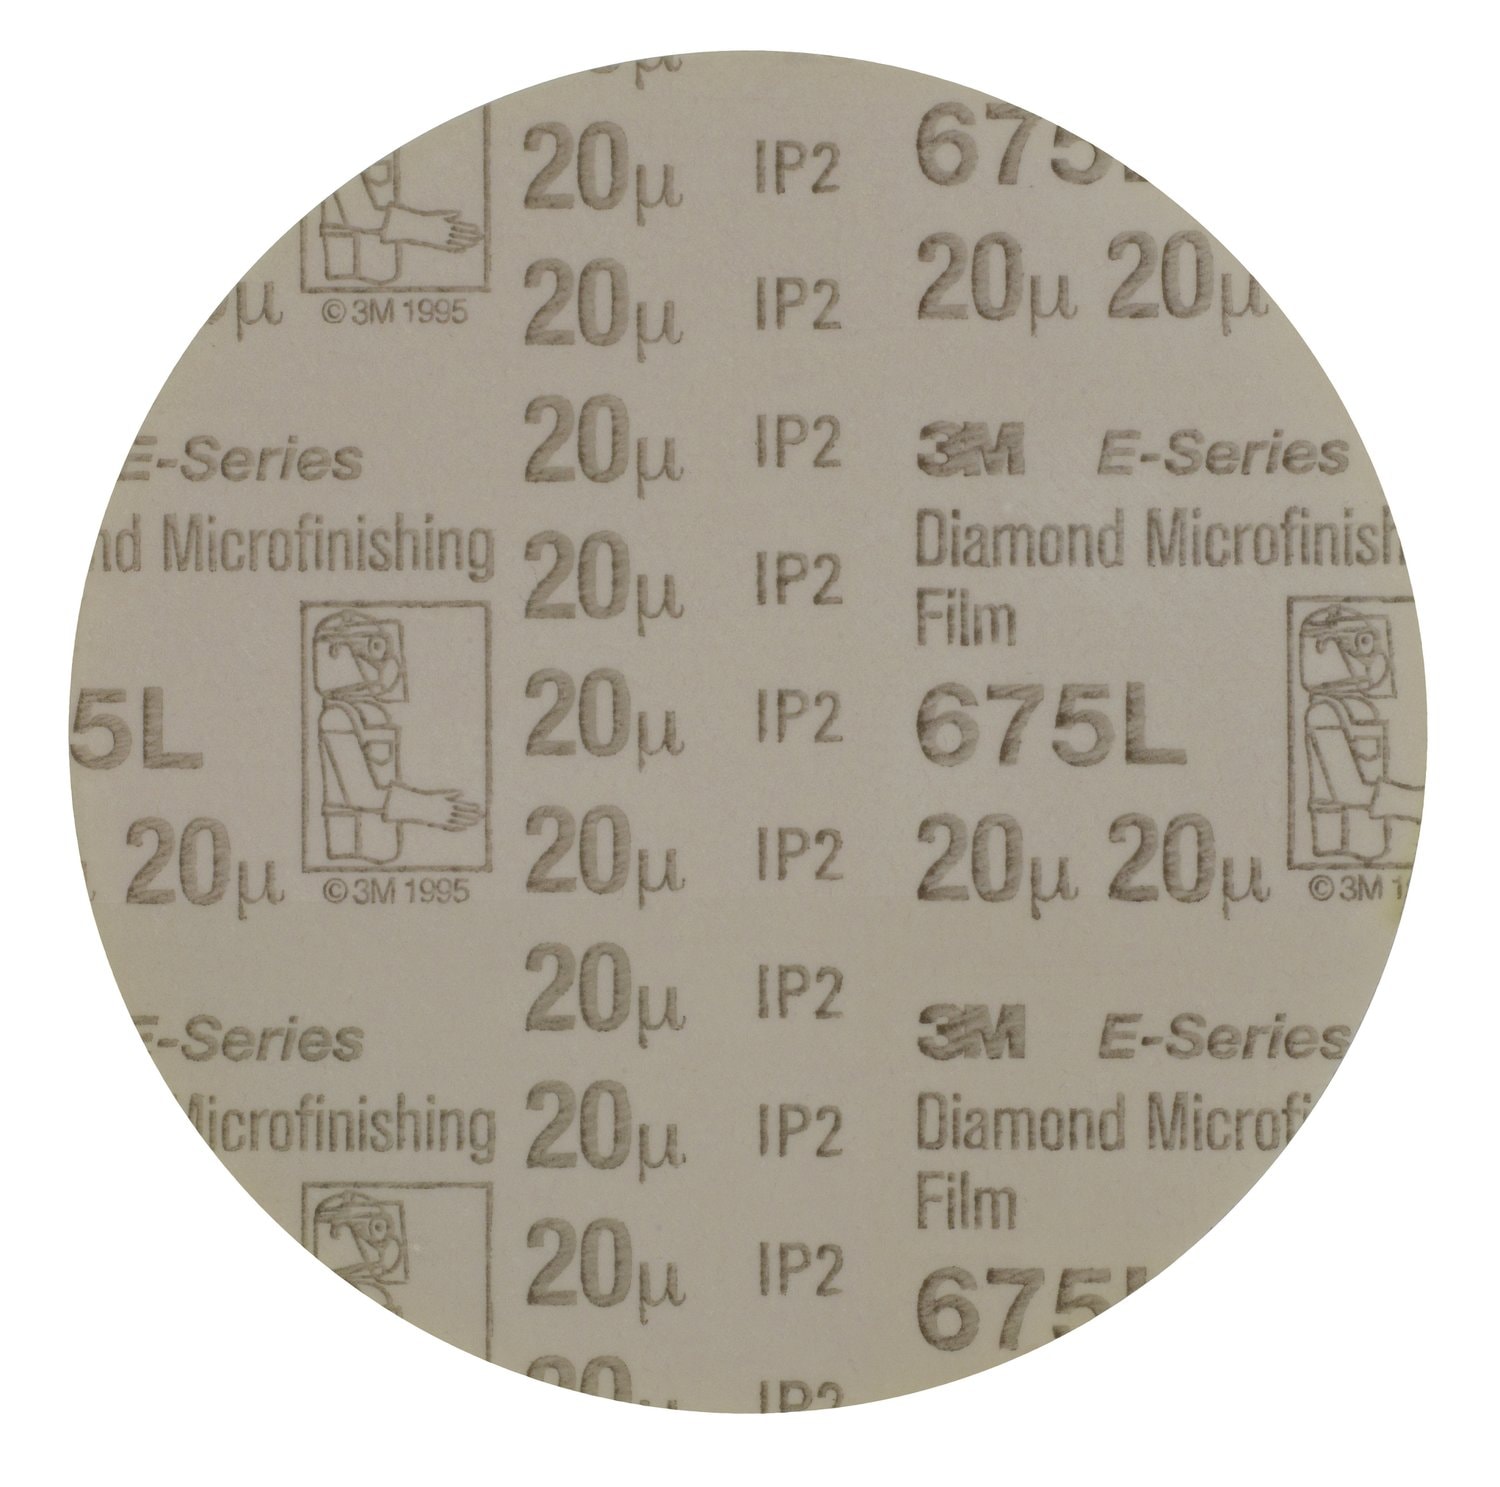 7100070359 - 3M Hookit Diamond Microfinishing Film Disc 675L, 20 Mic, Config